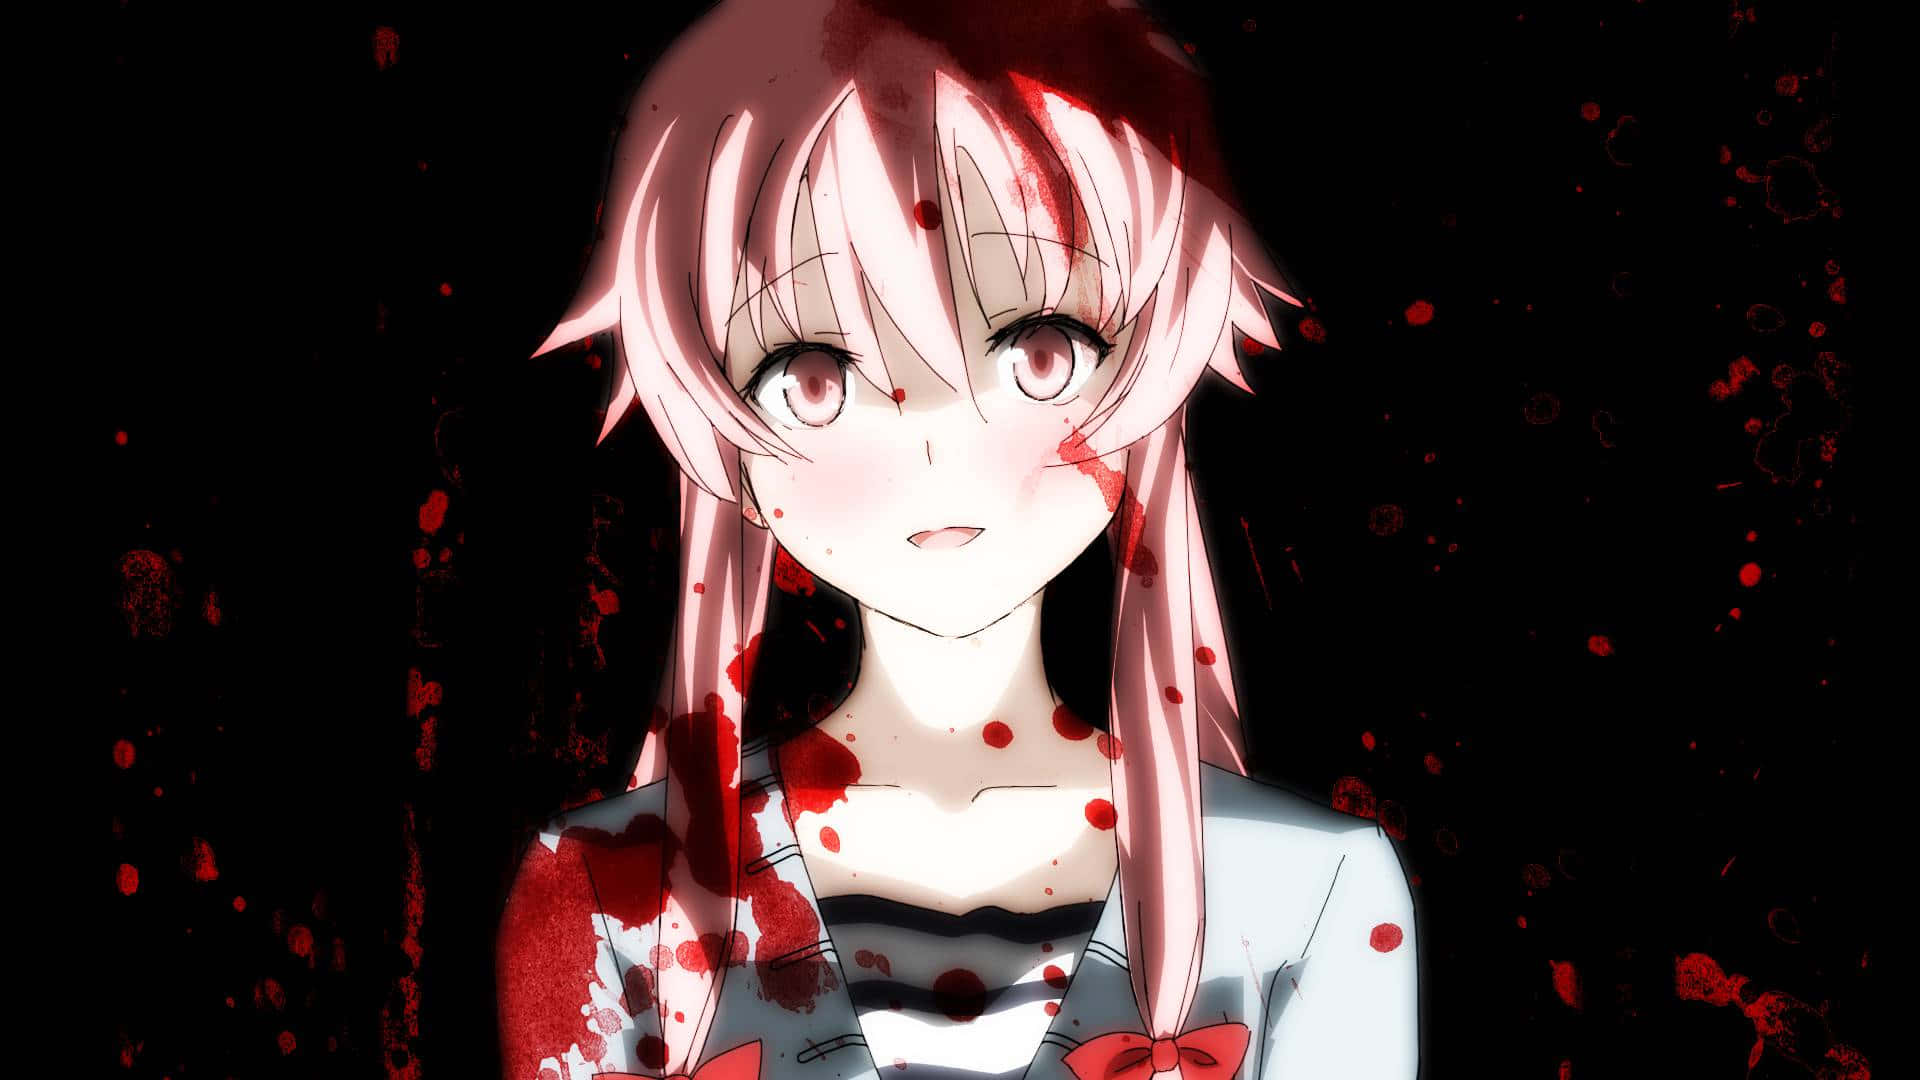 Psycho Anime Girl in Lonely Despair Wallpaper